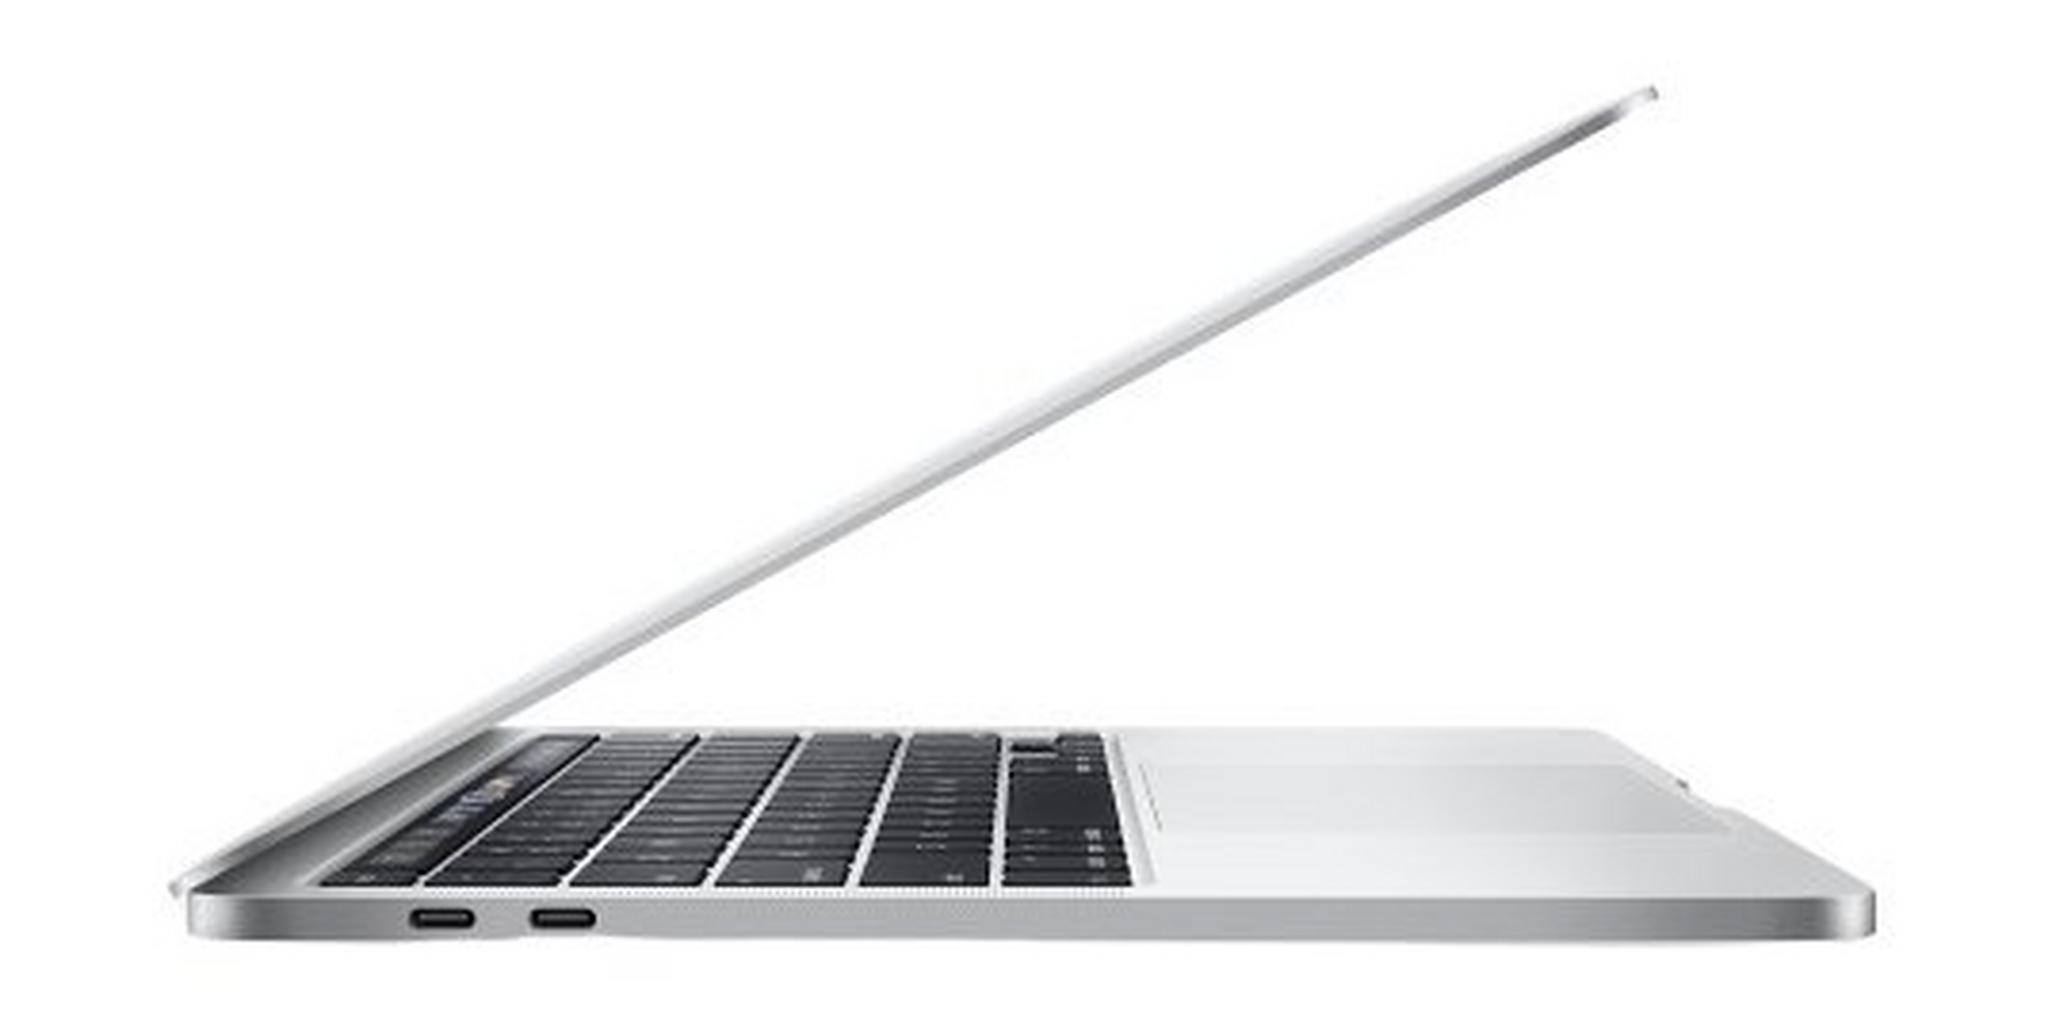 Apple Macbook Pro 8th Gen Core i5 8GB RAM 256GB SSD 13.3-inch Laptop (MXK62AB/A) - Silver